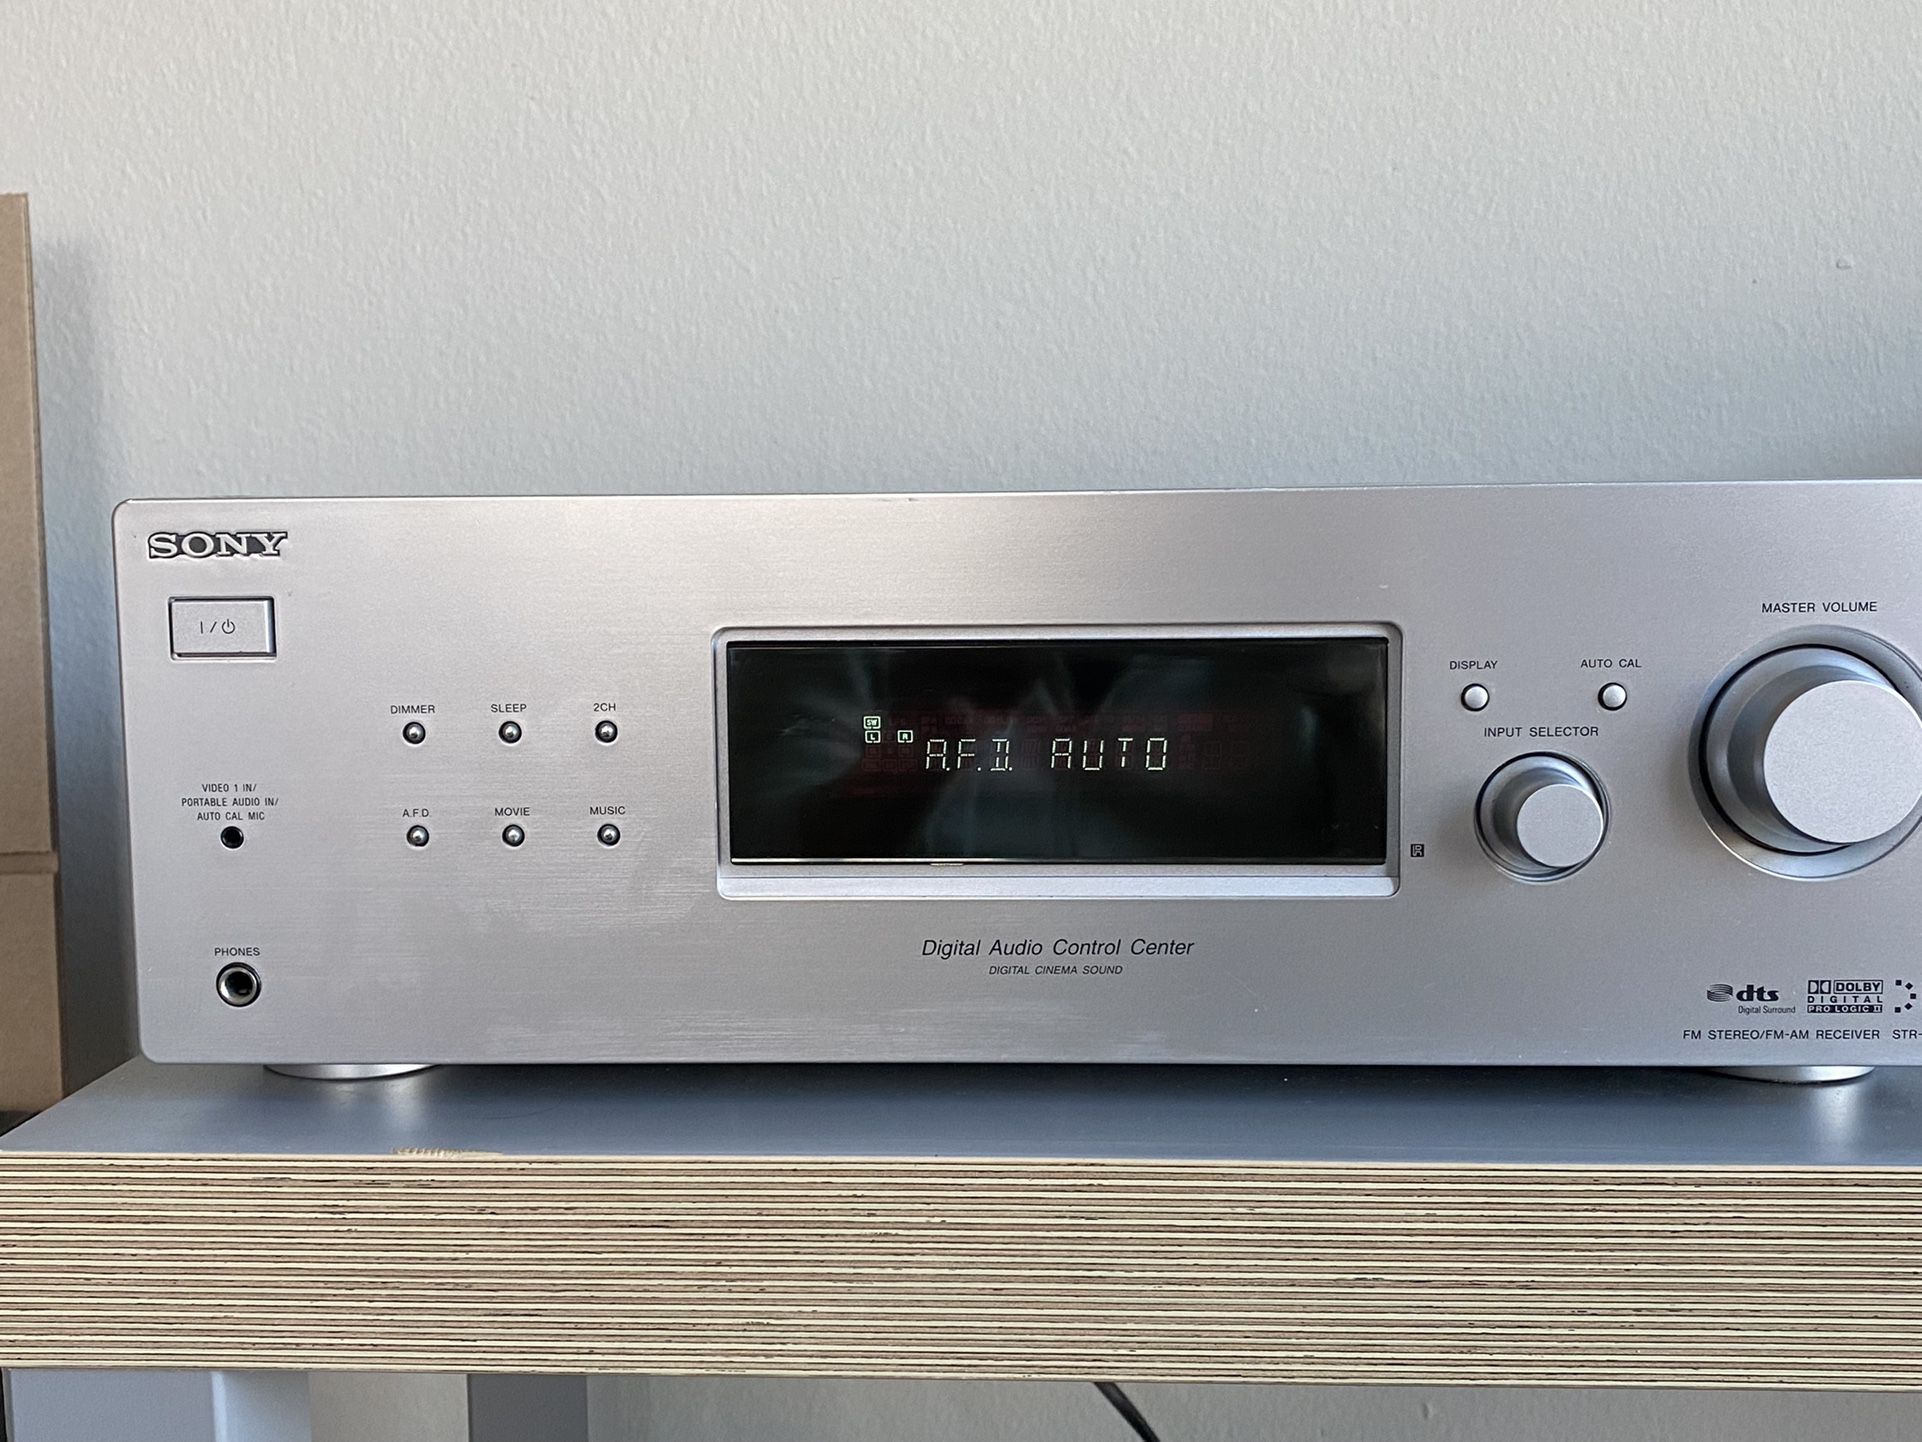 Sony STR-K790 Receiver HiFi Stereo Vintage 5.1 Channel Surround Sound Home Audio